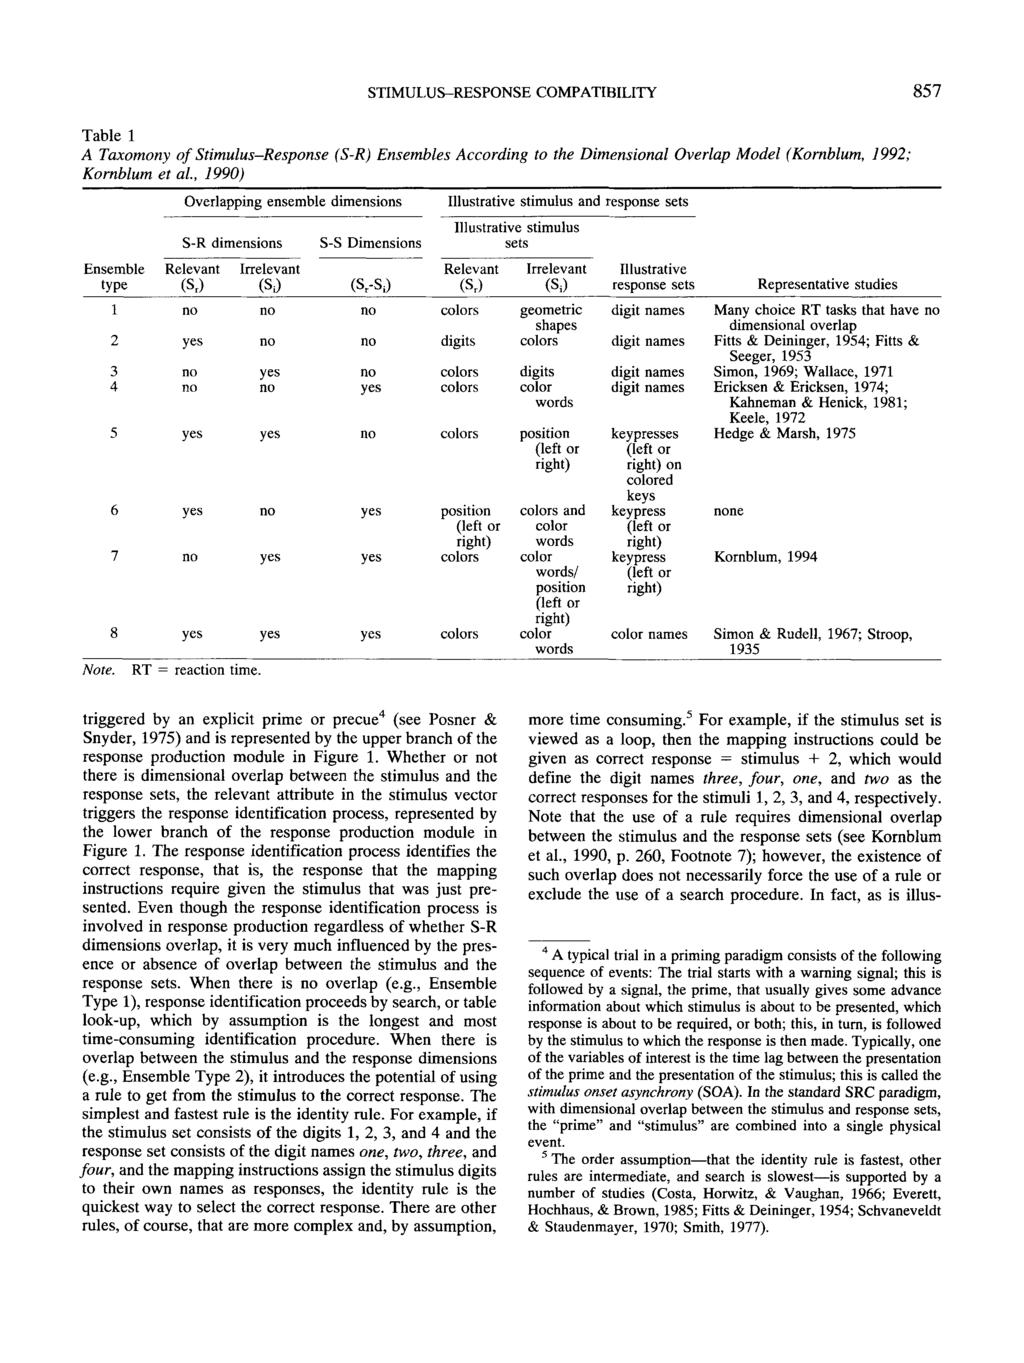 STIMULUS-RESPONSE COMPATIBILITY 857 Table 1 A Taxomony of Stimulus-Response (S-R) Ensembles According to the Dimensional Overlap Model (Komblum, 1992; Kornblum et al, 1990) Ensemble type 1 2 3 4 5 6